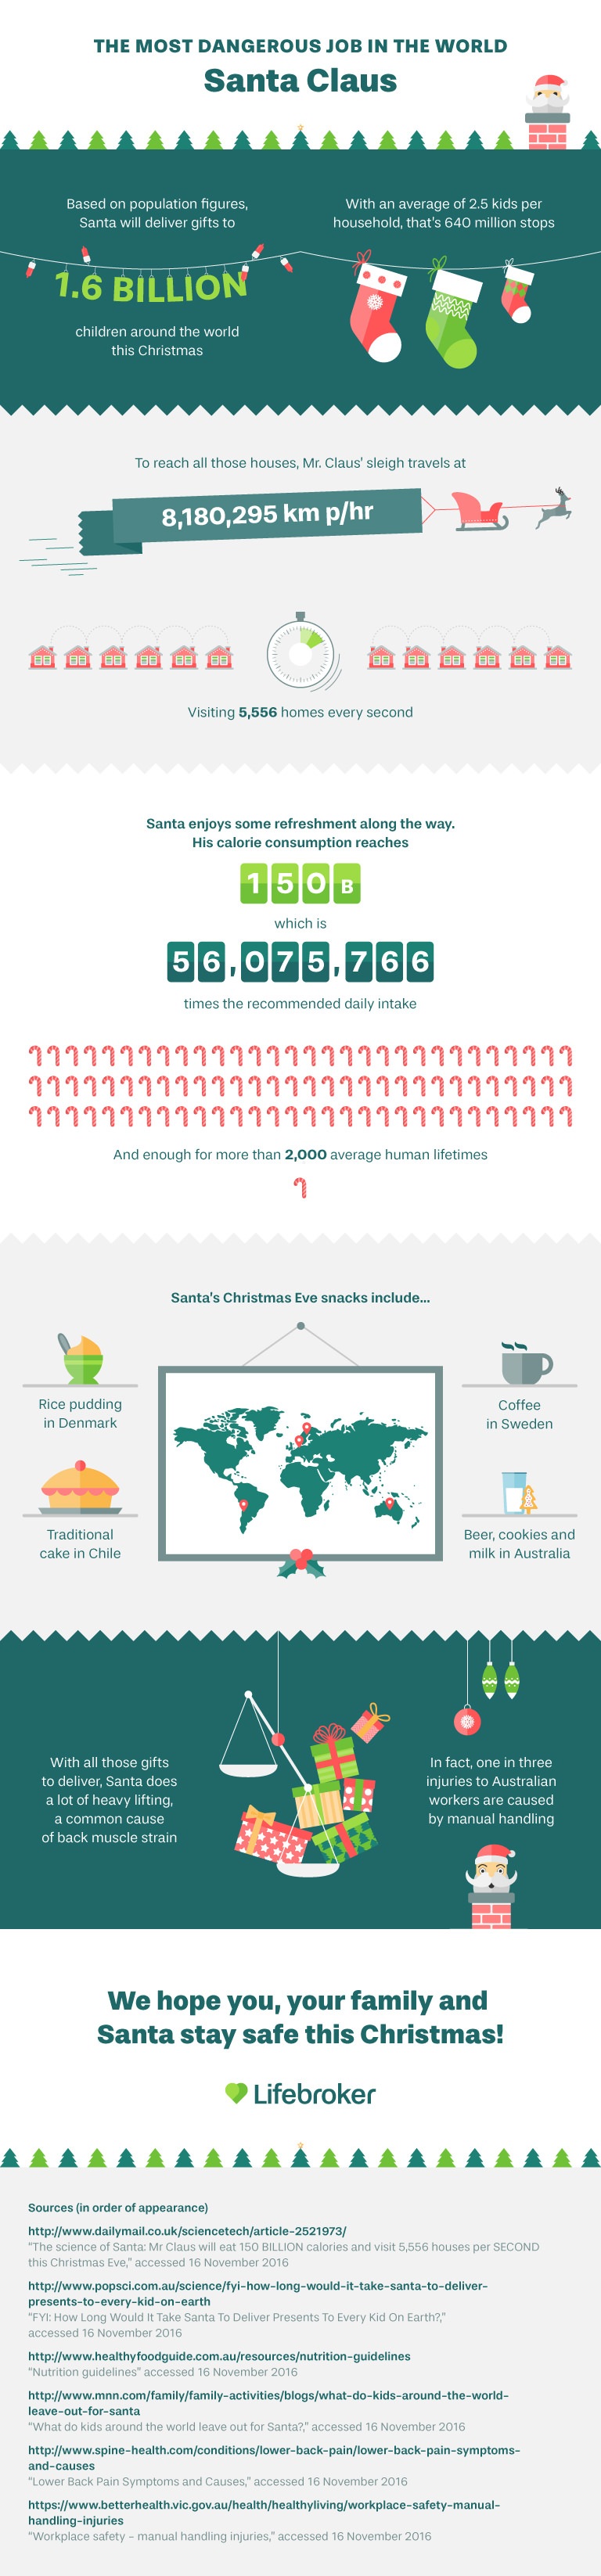 Santa_infographic